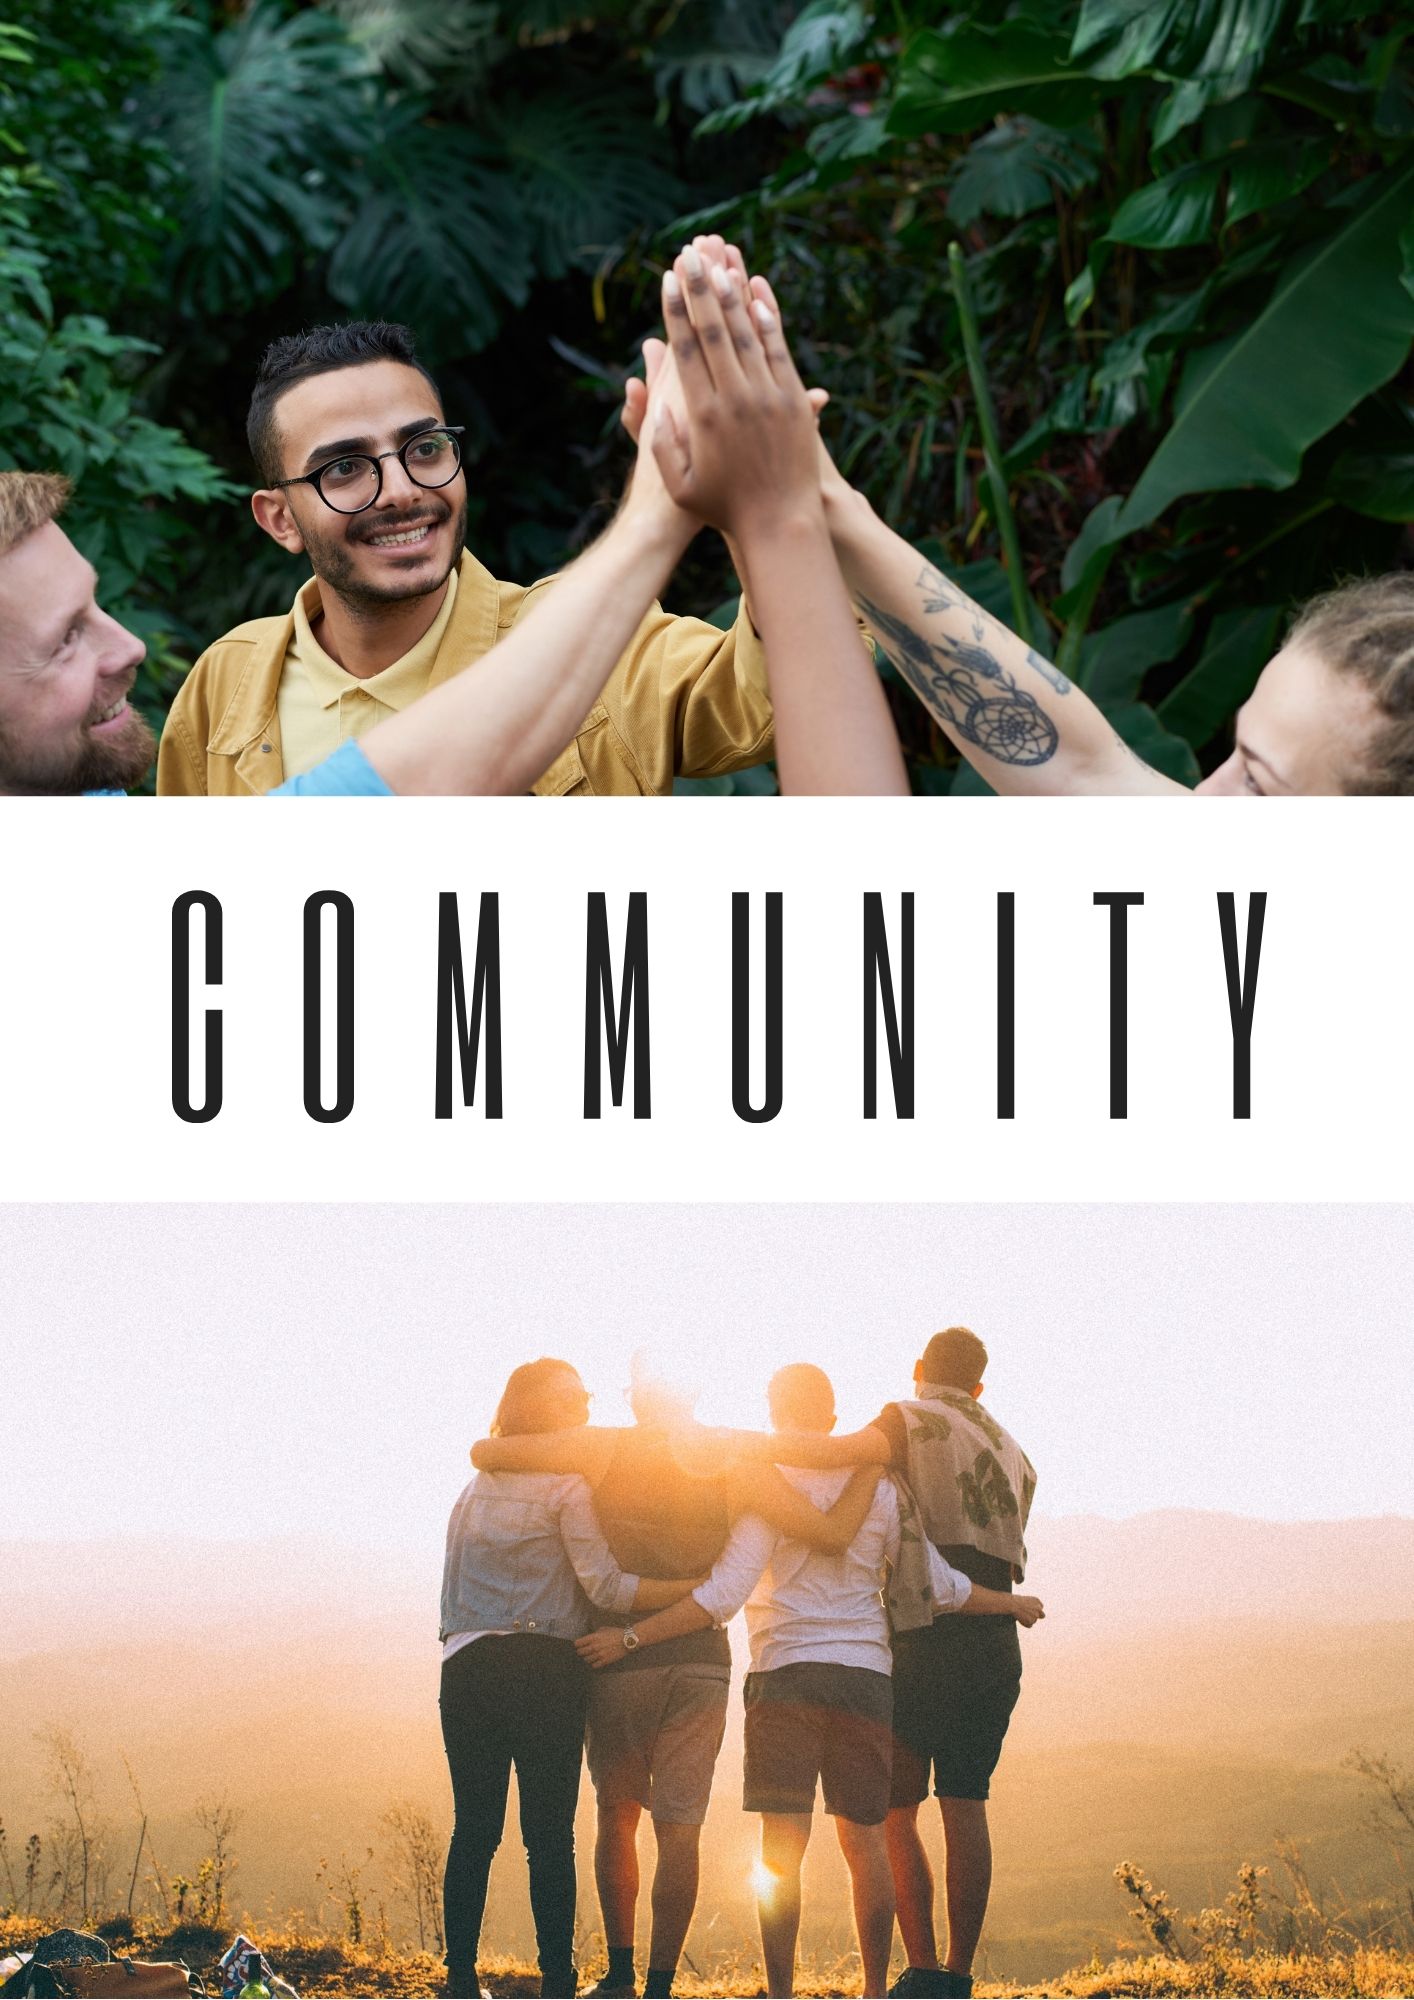 Community creates happiness